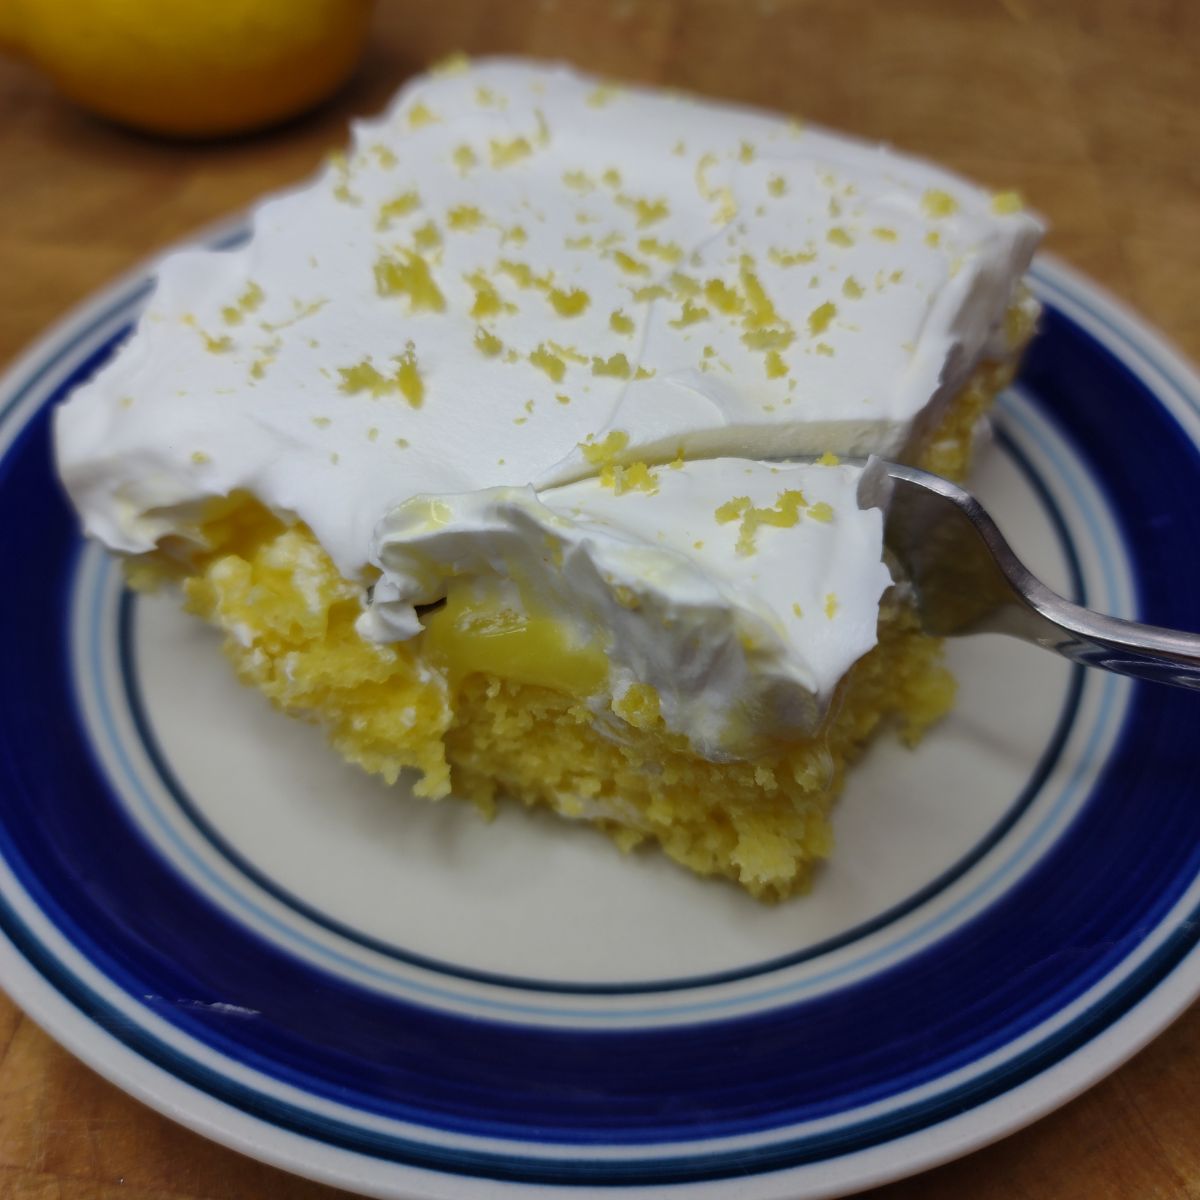 Lemon poke cake on a plate.